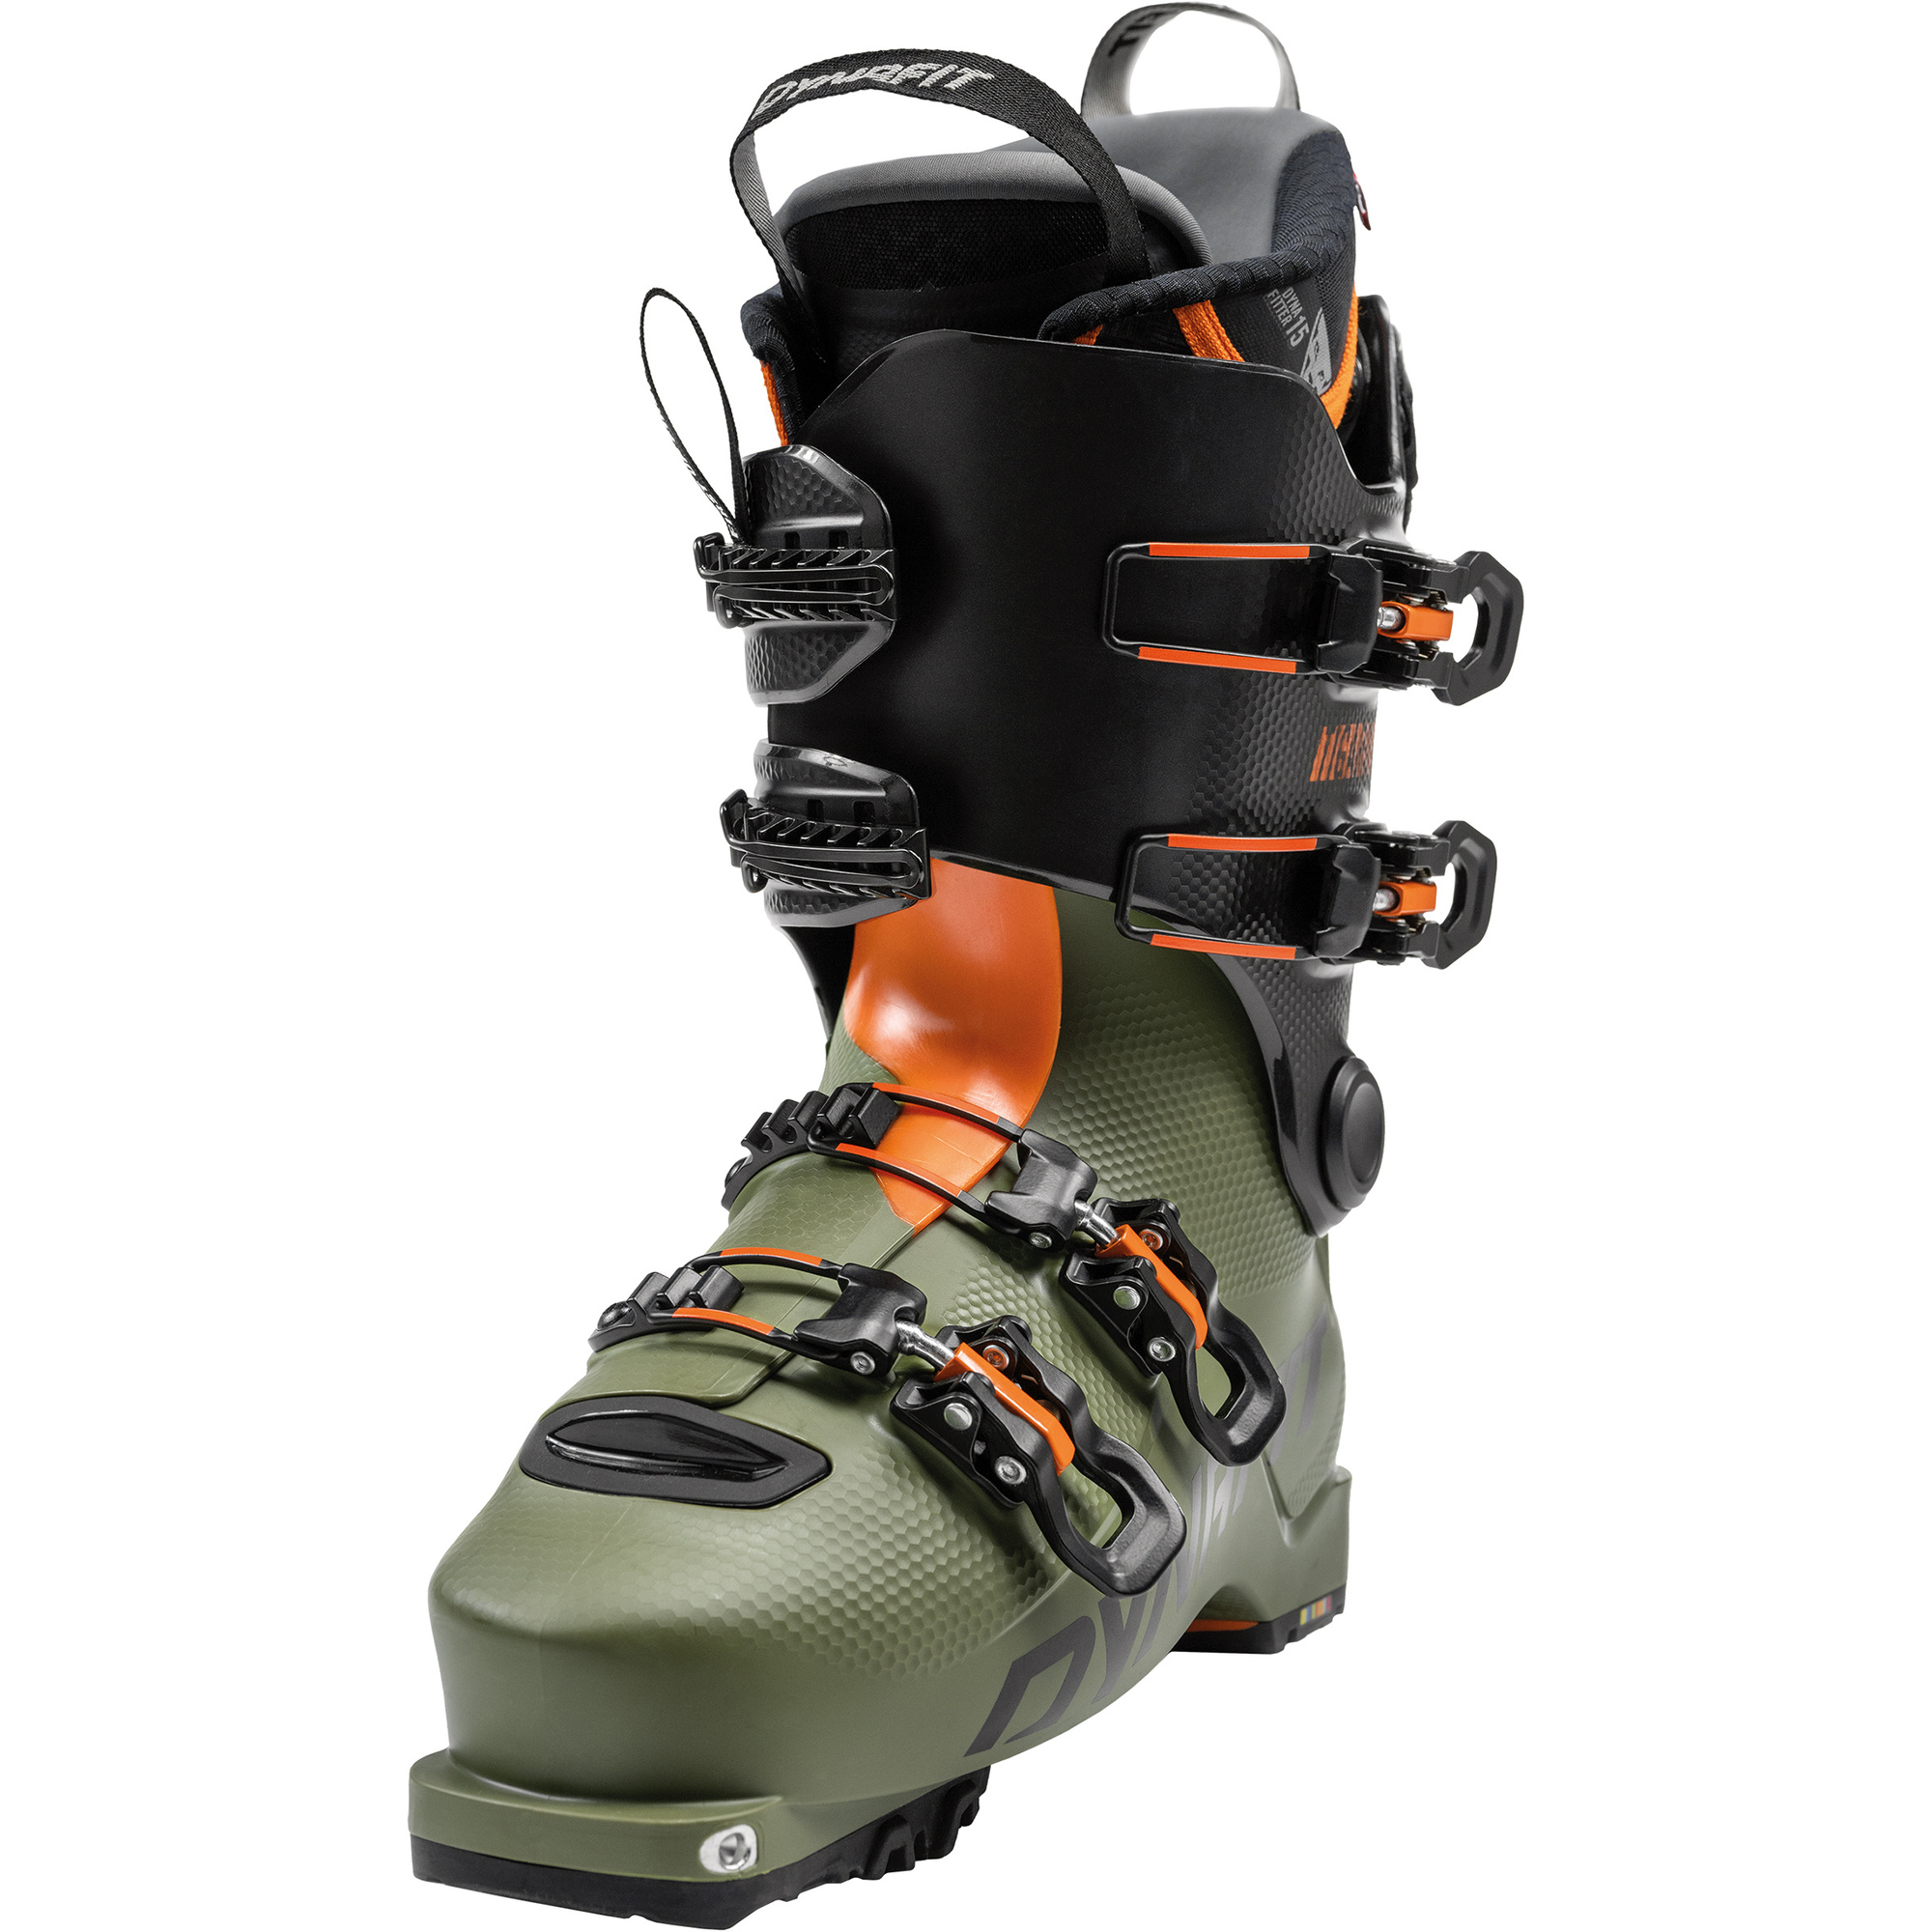 Im Test: Dynafit Tigard 130 Skitourenschuh